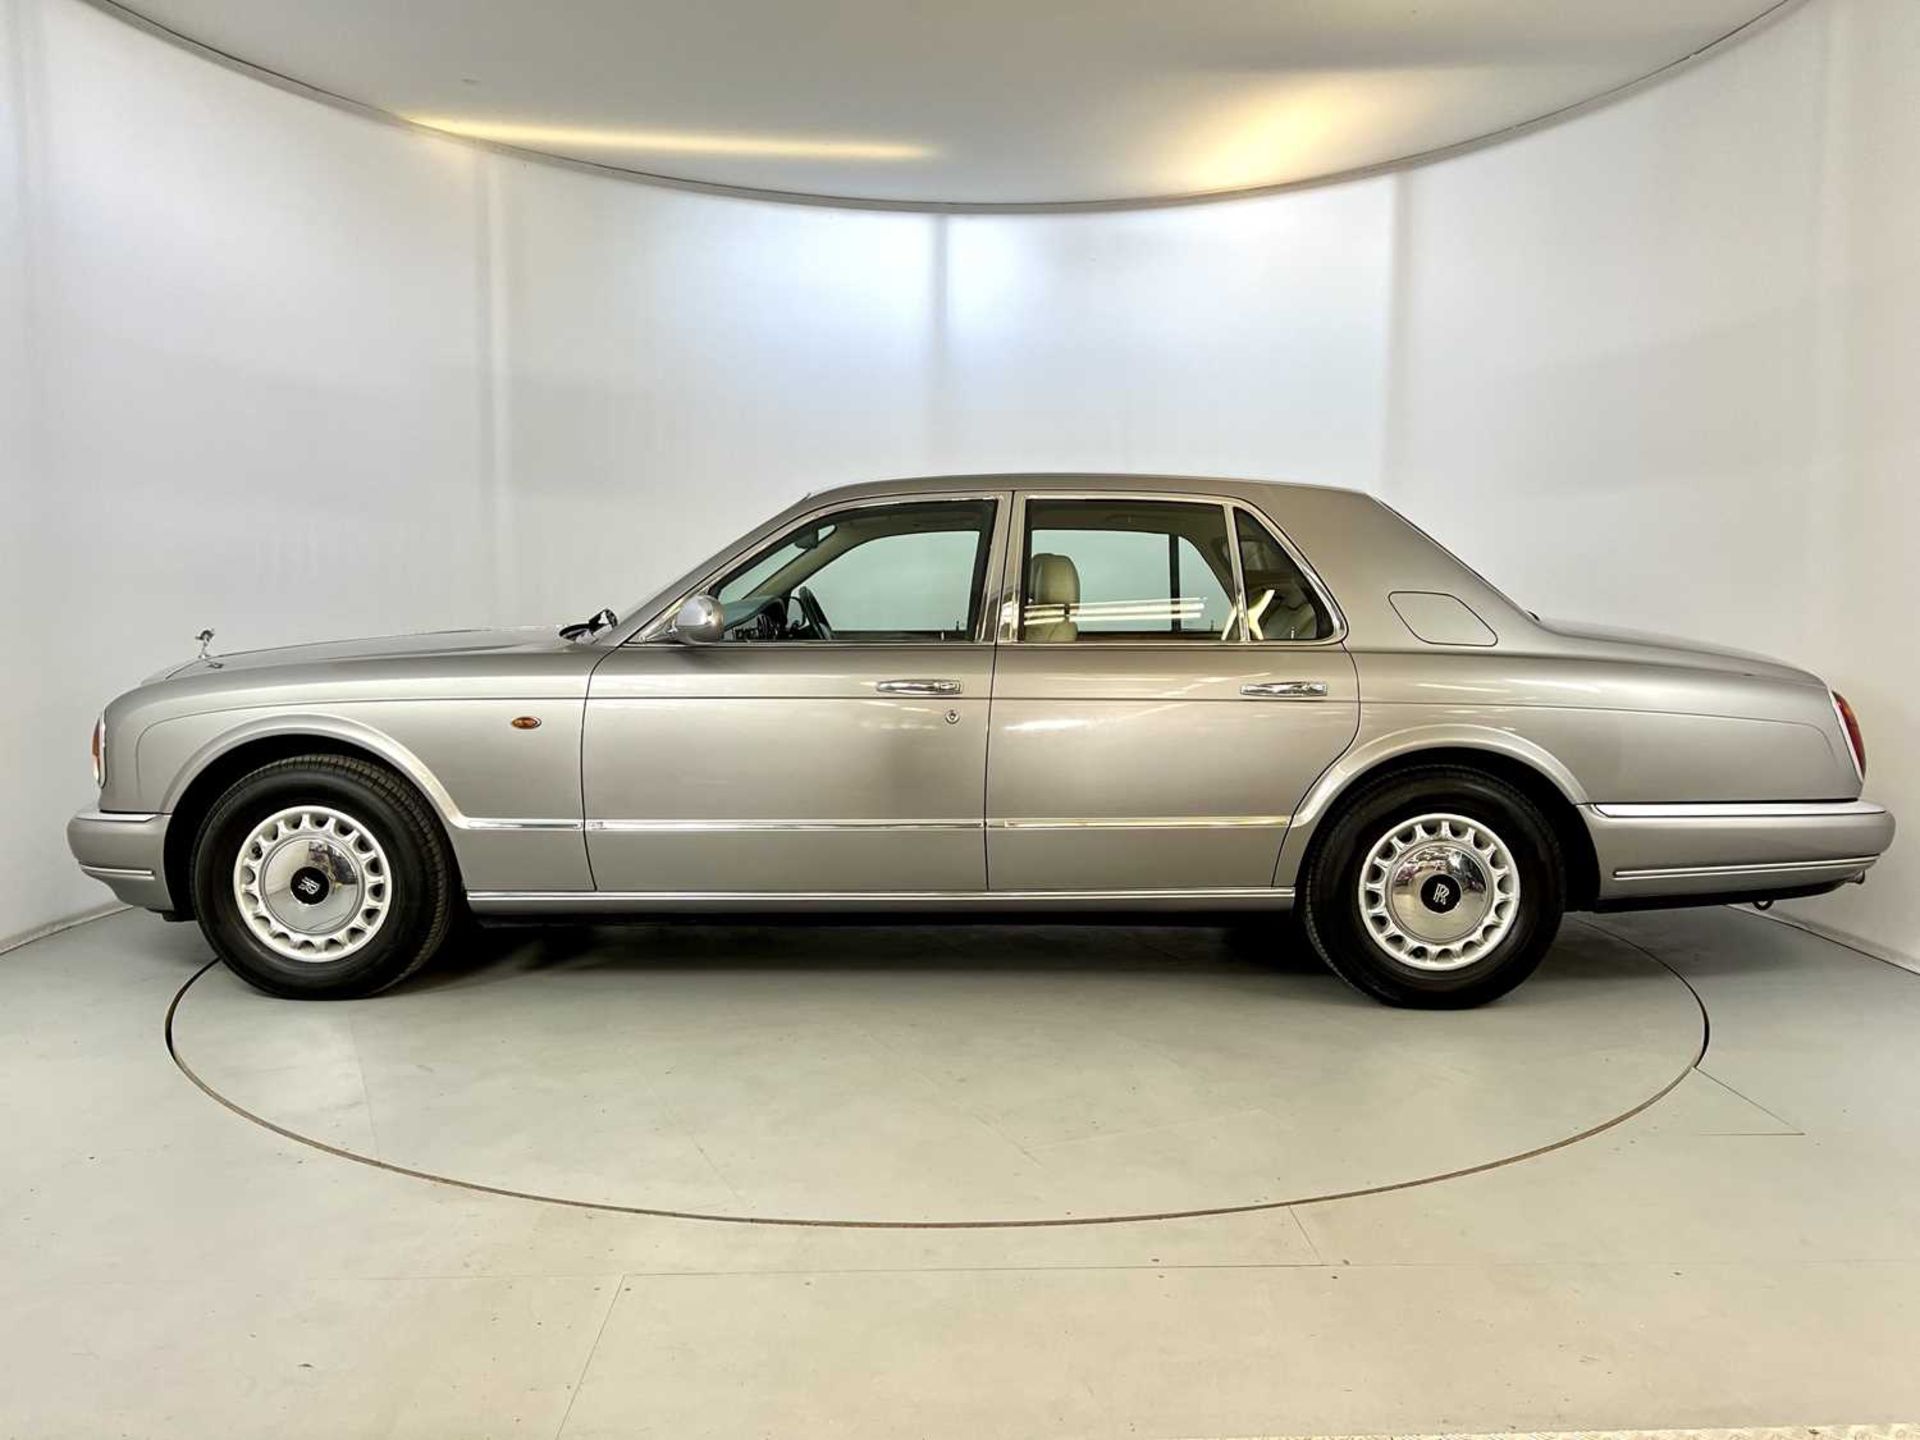 1999 Rolls Royce Silver Seraph - Image 5 of 38